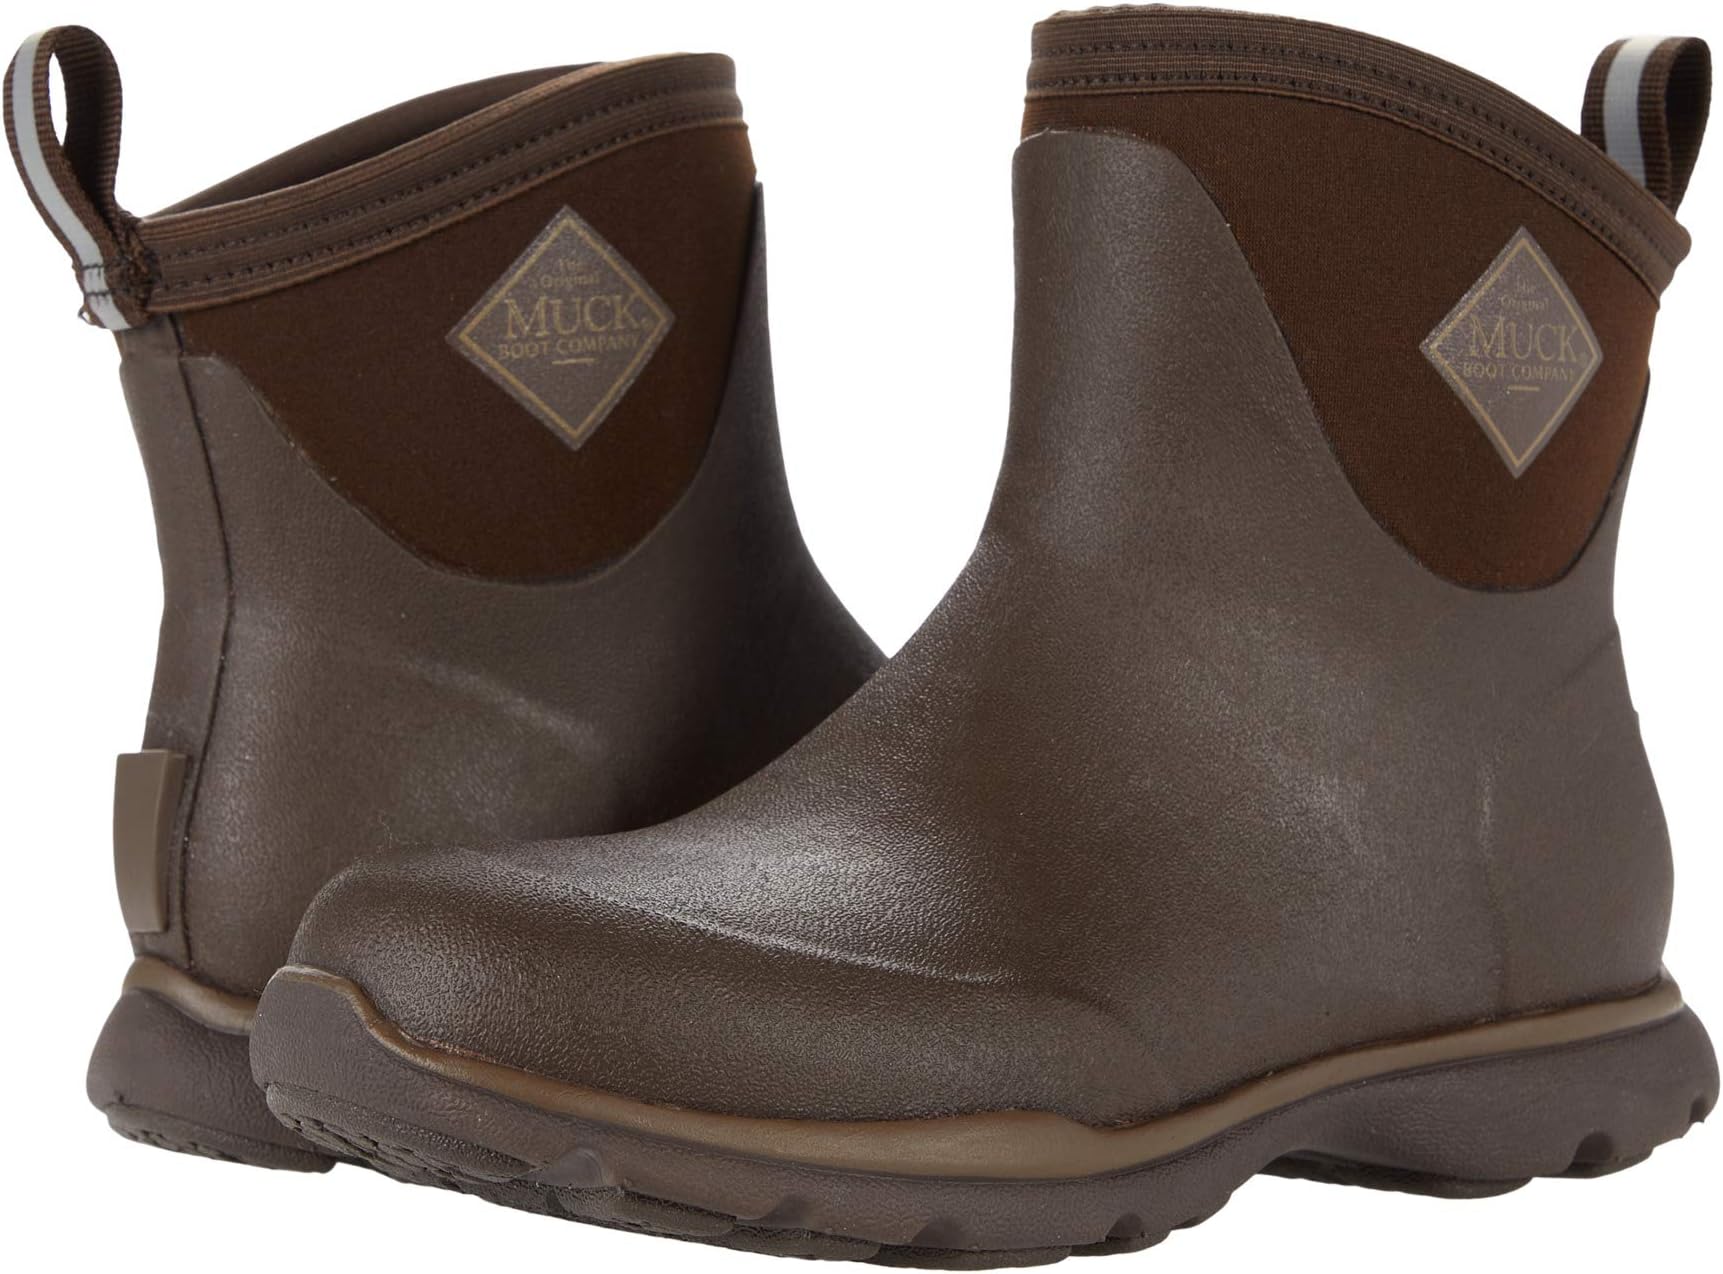 Зимние ботинки Arctic Excursion Ankle The Original Muck Boot Company, коричневый